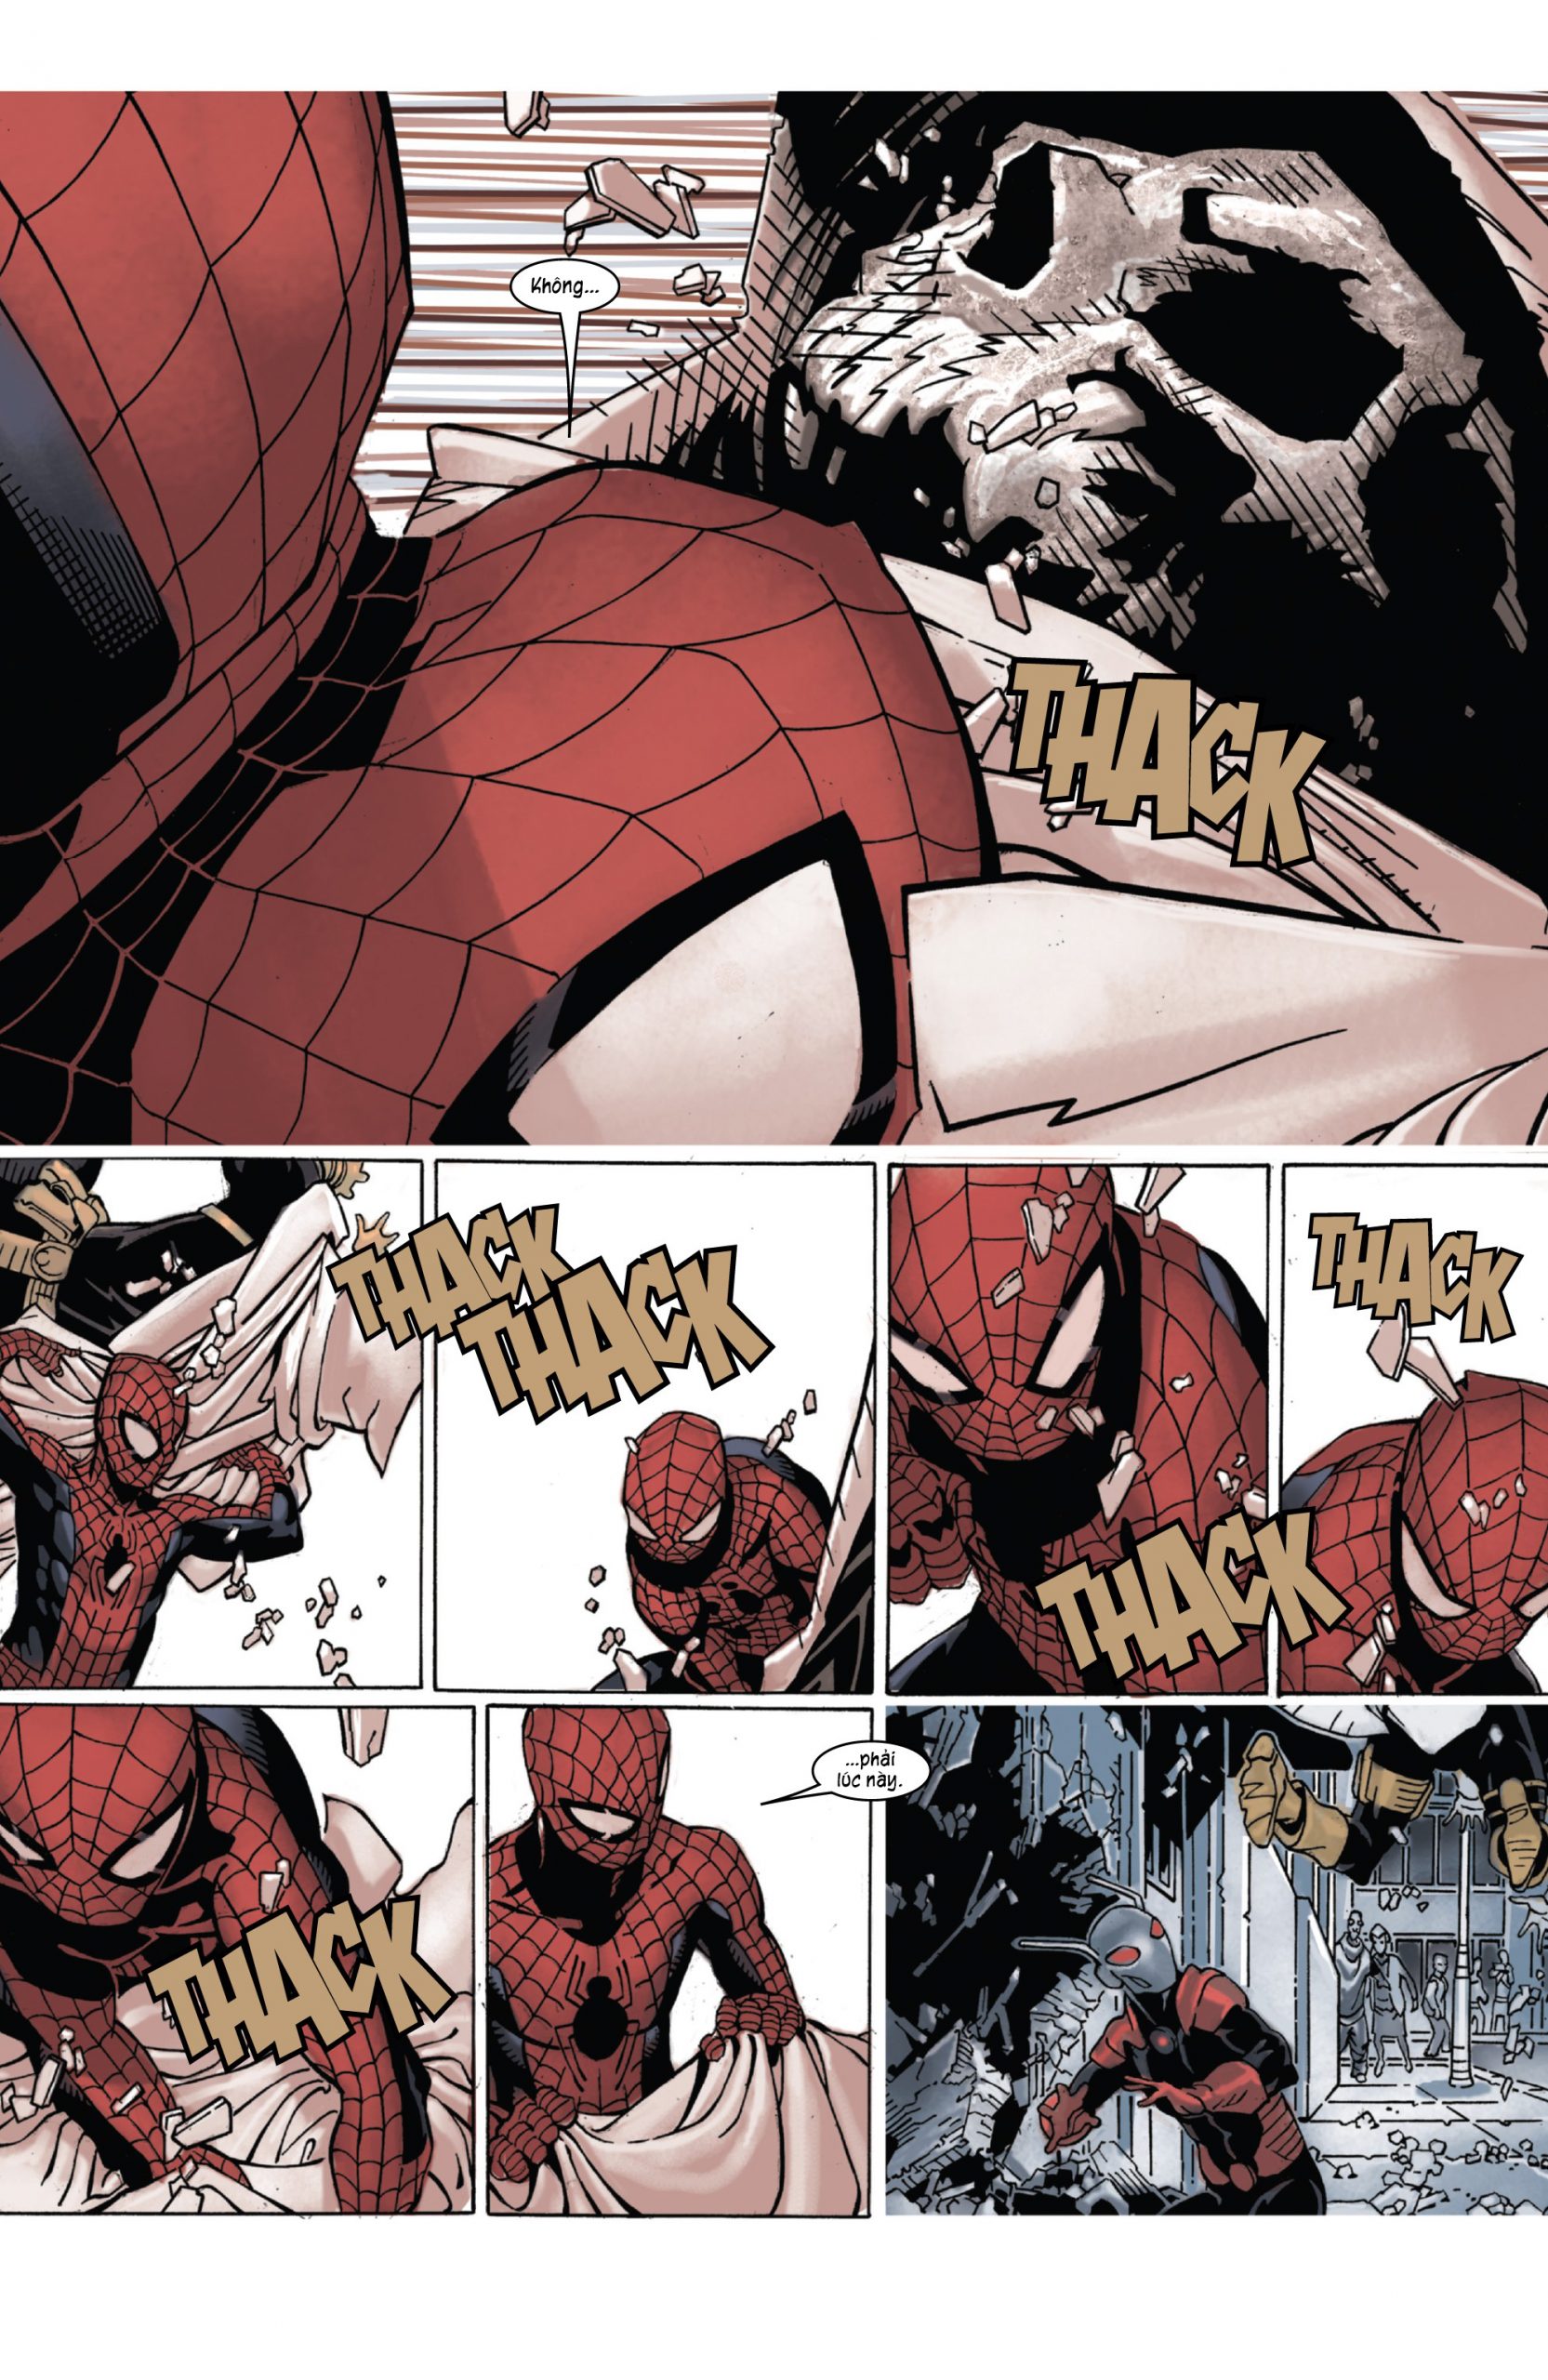 https://langgeek.net/wp-content/webpc-passthru.php?src=https://langgeek.net/wp-content/uploads/2022/01/Amazing-Spider-Man-015-006-scaled.jpg&nocache=1